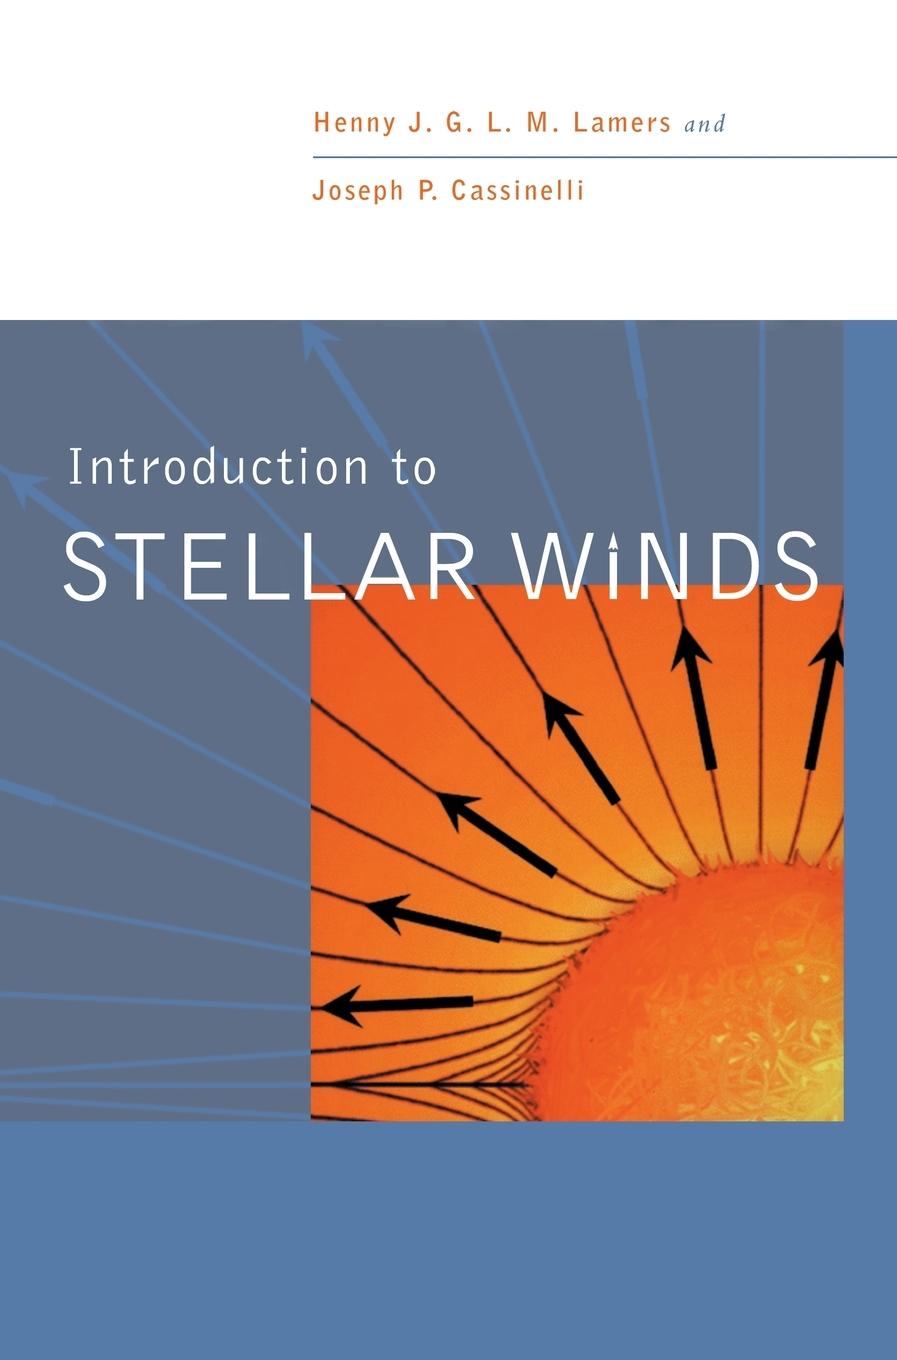 Introduction to Stellar Winds - Lamers, Henny J. G. L. M. Cassinelli, Joseph P.